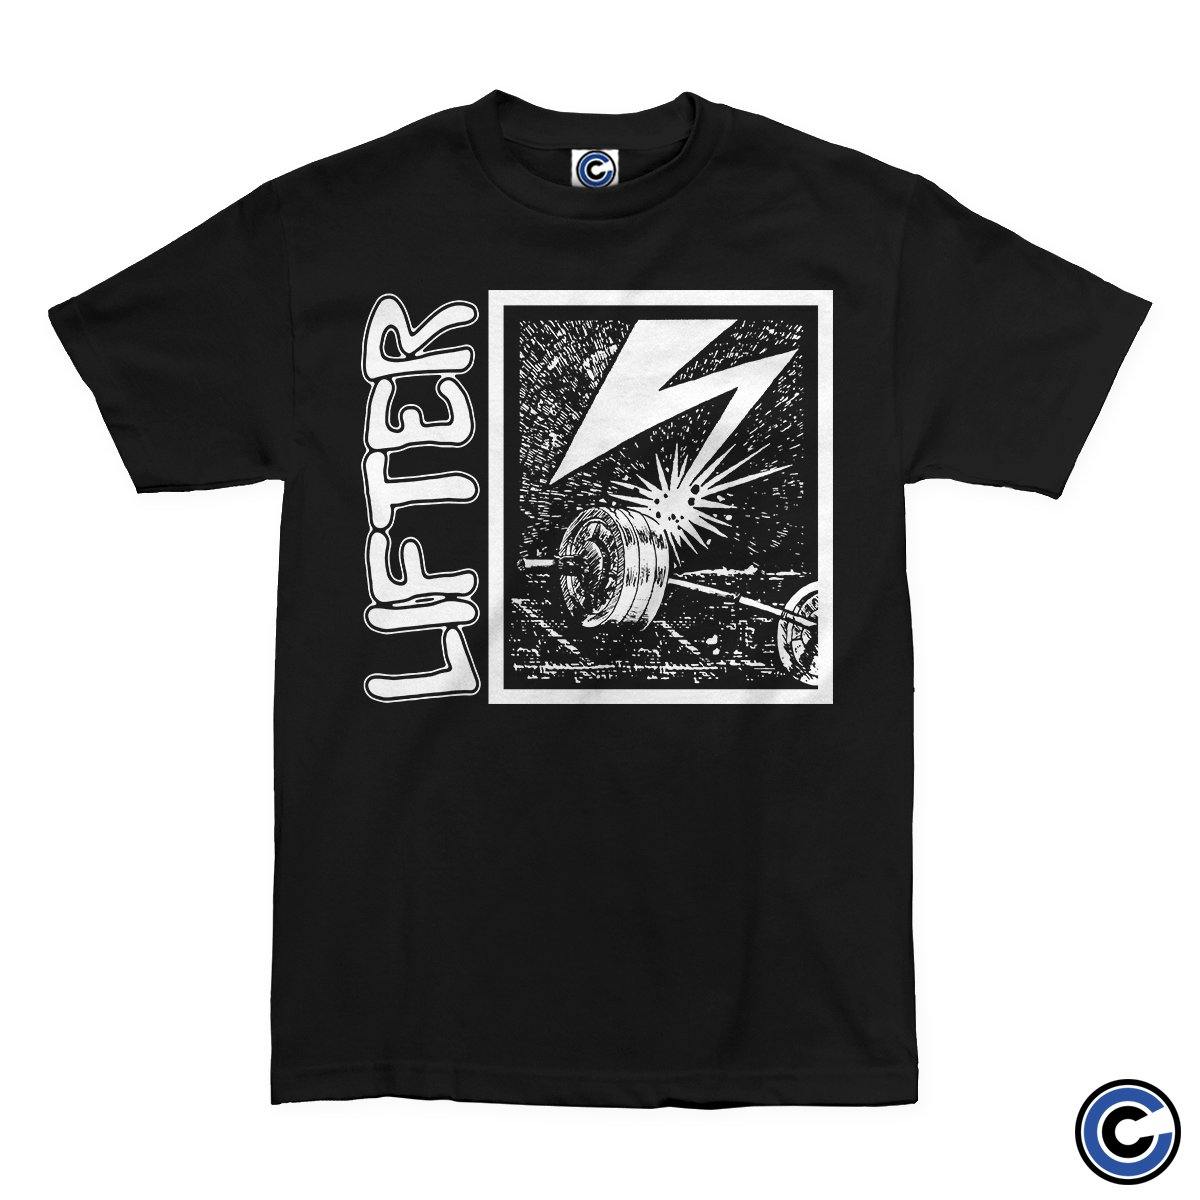 Buy – Lifter "Lightning" Shirt – Band & Music Merch – Cold Cuts Merch